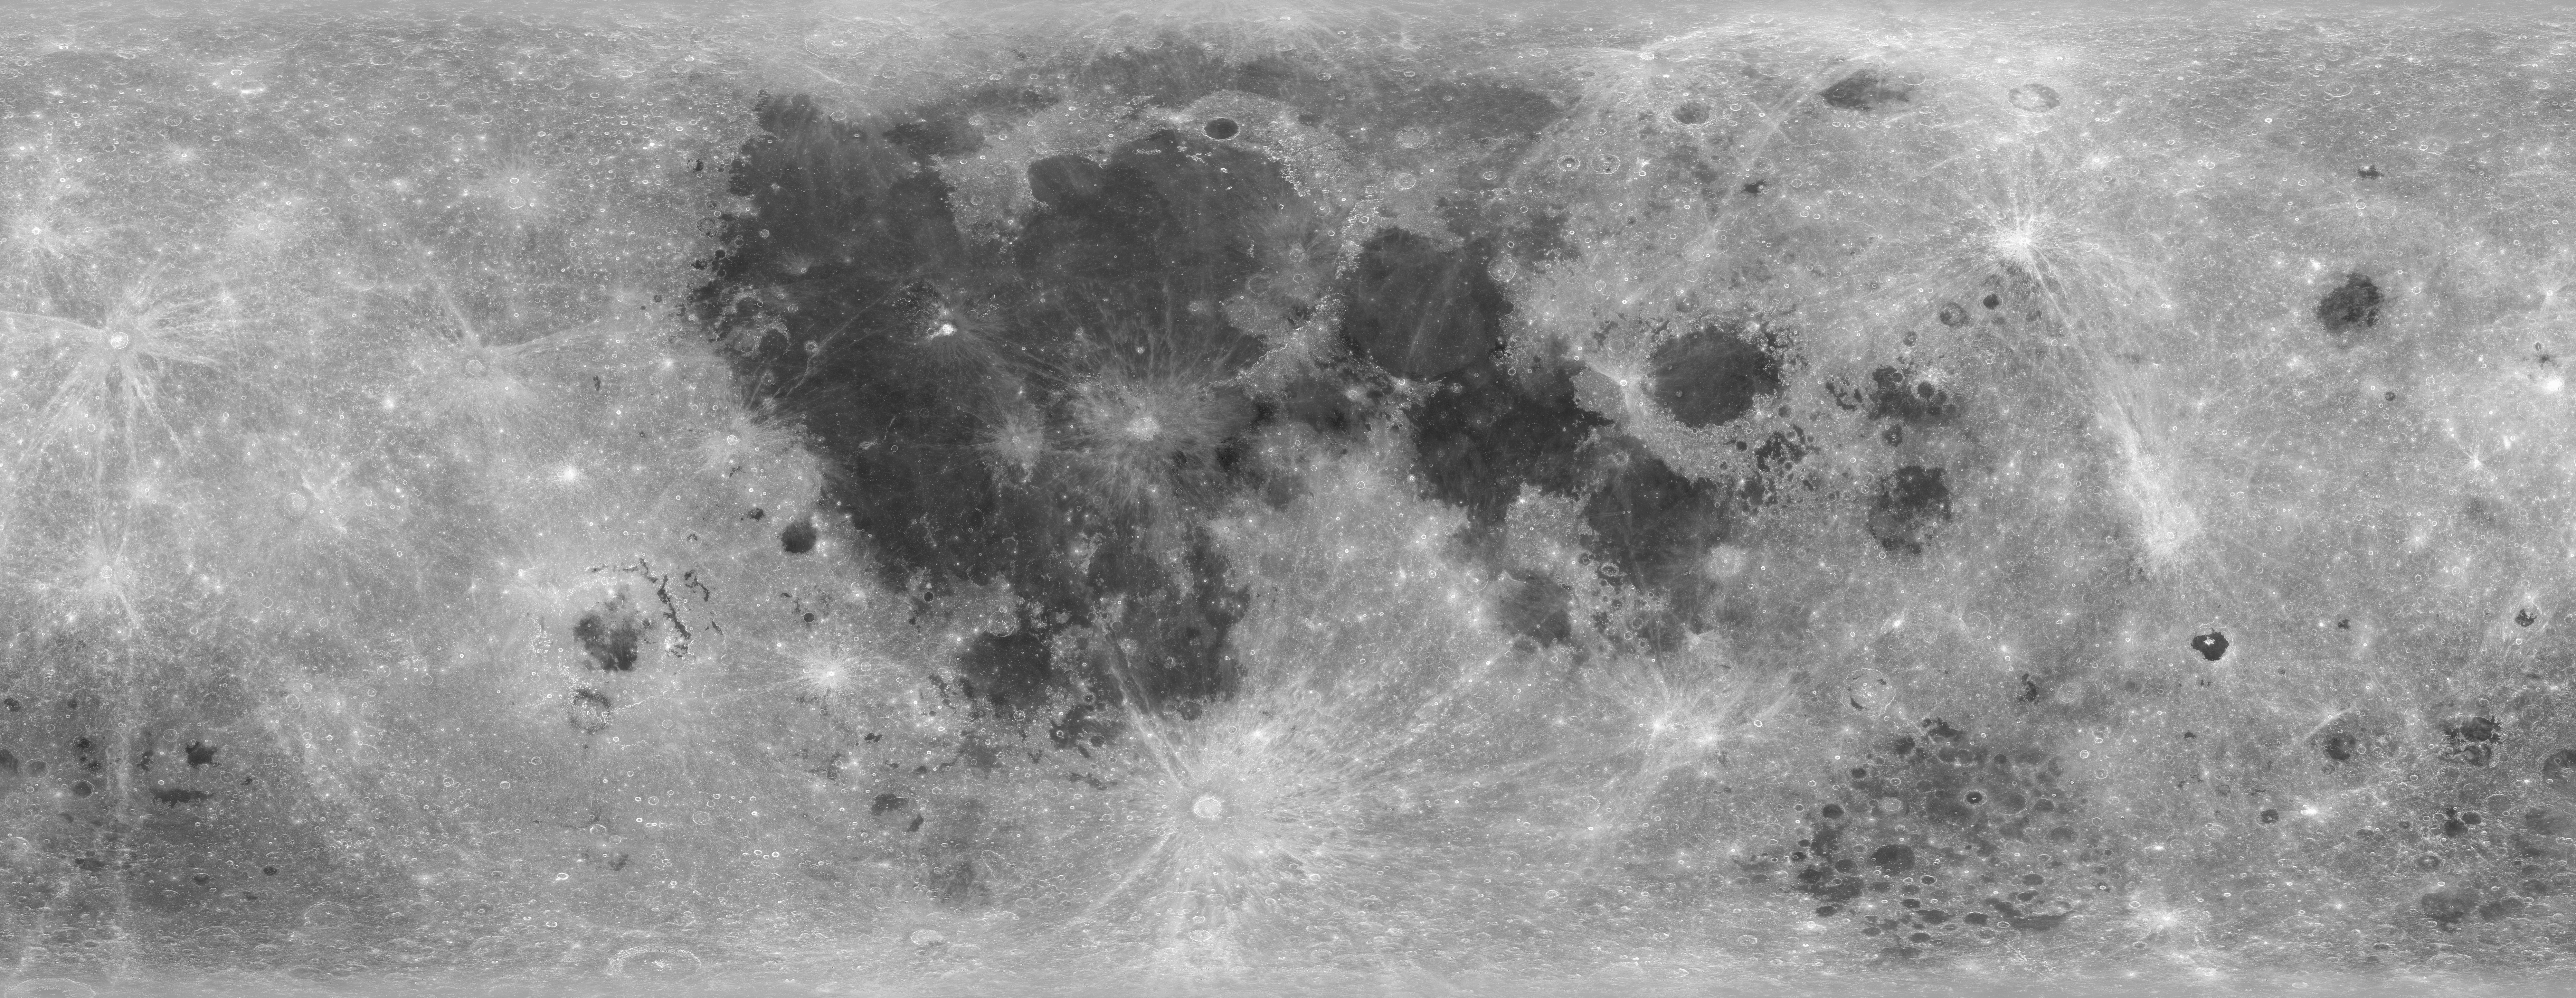 Earth's Moon, Flattened (Image)